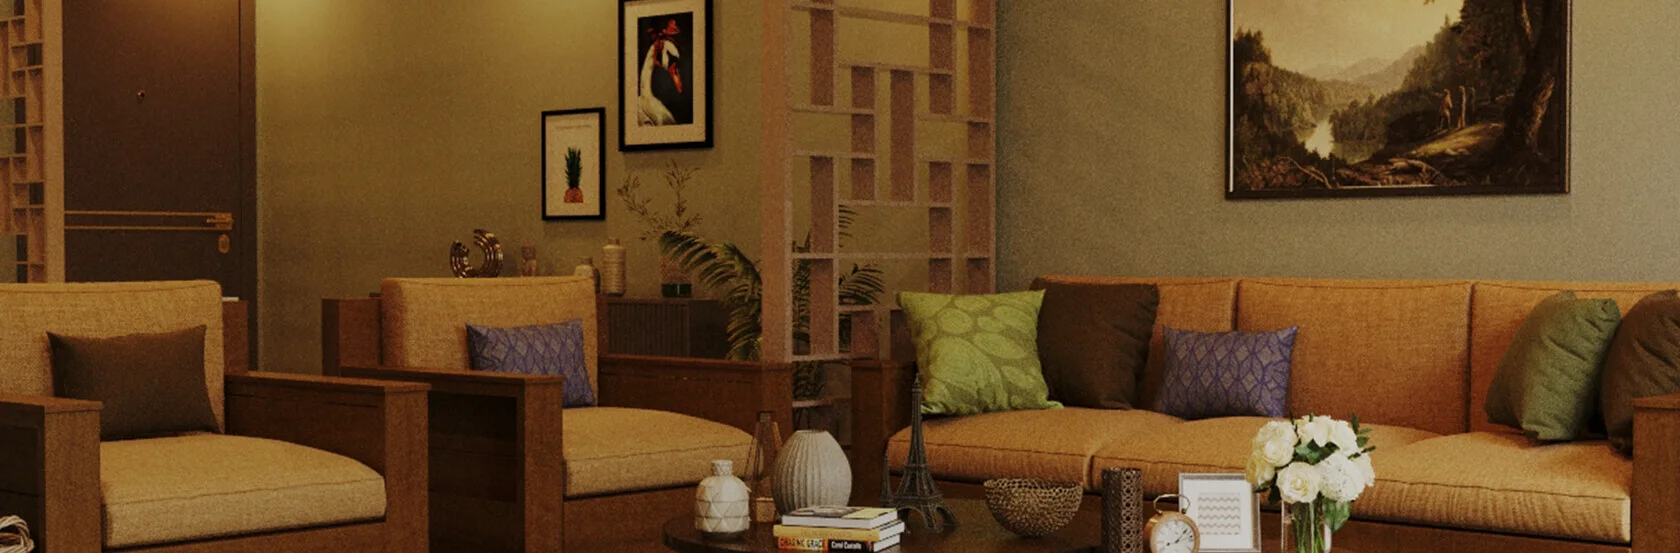 beautiful-home-service-living-room-spotlight-asian-paints